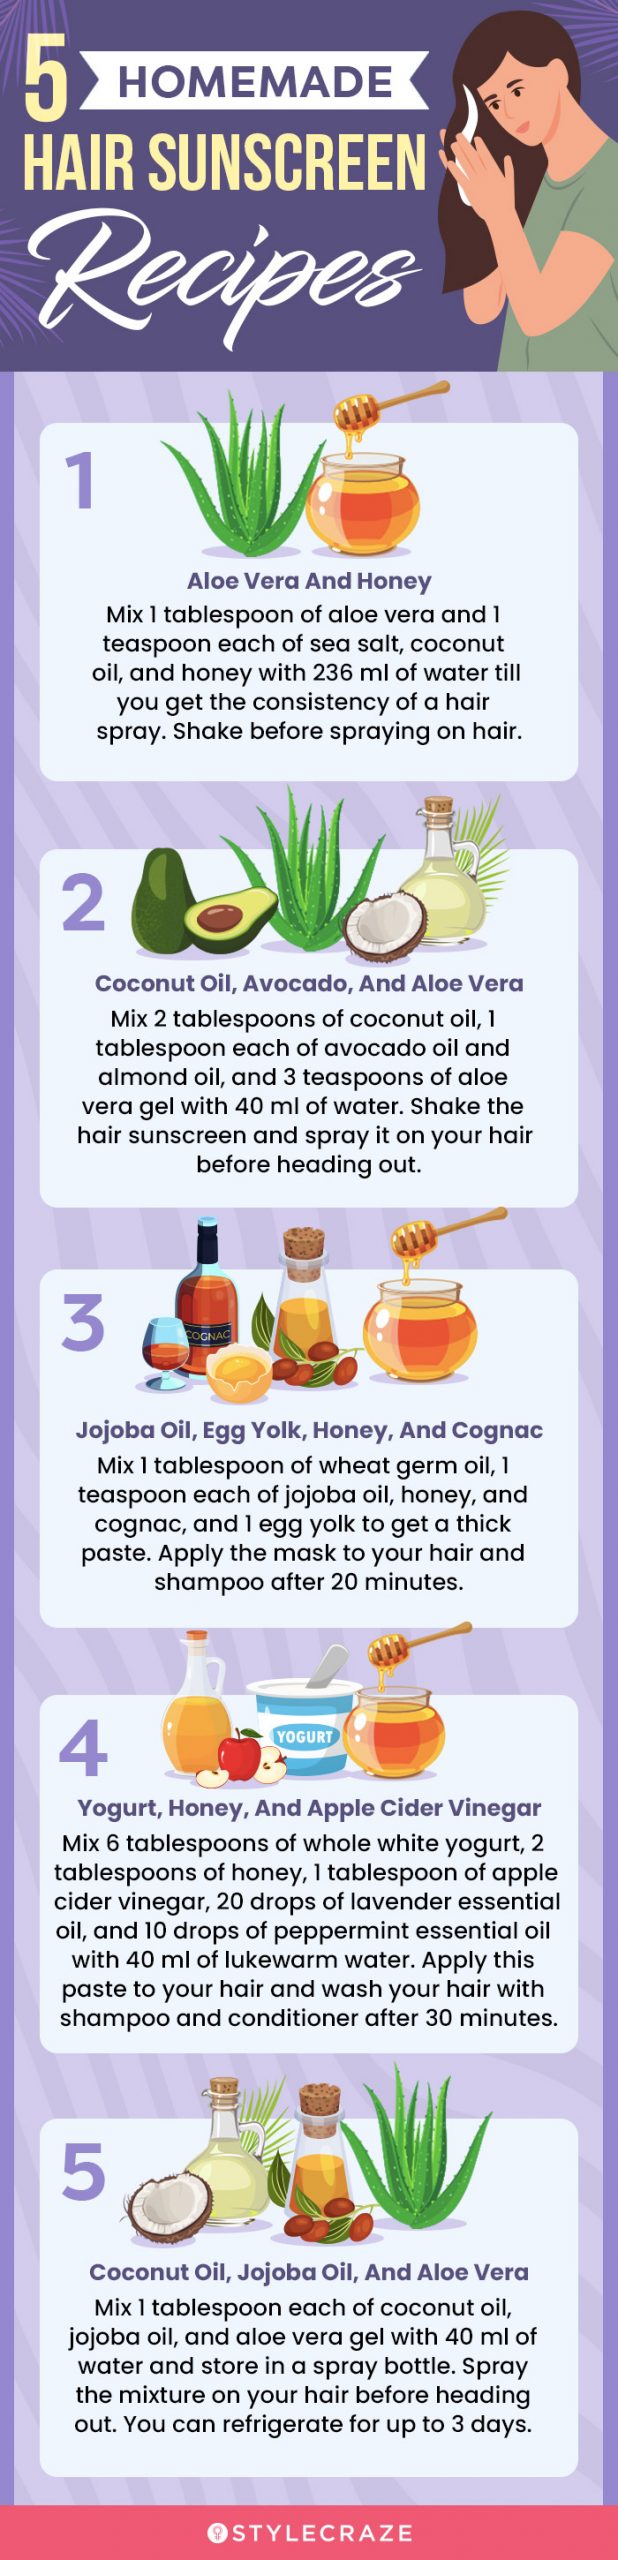 5 homemade hair sunscreen recipes (infographic) 